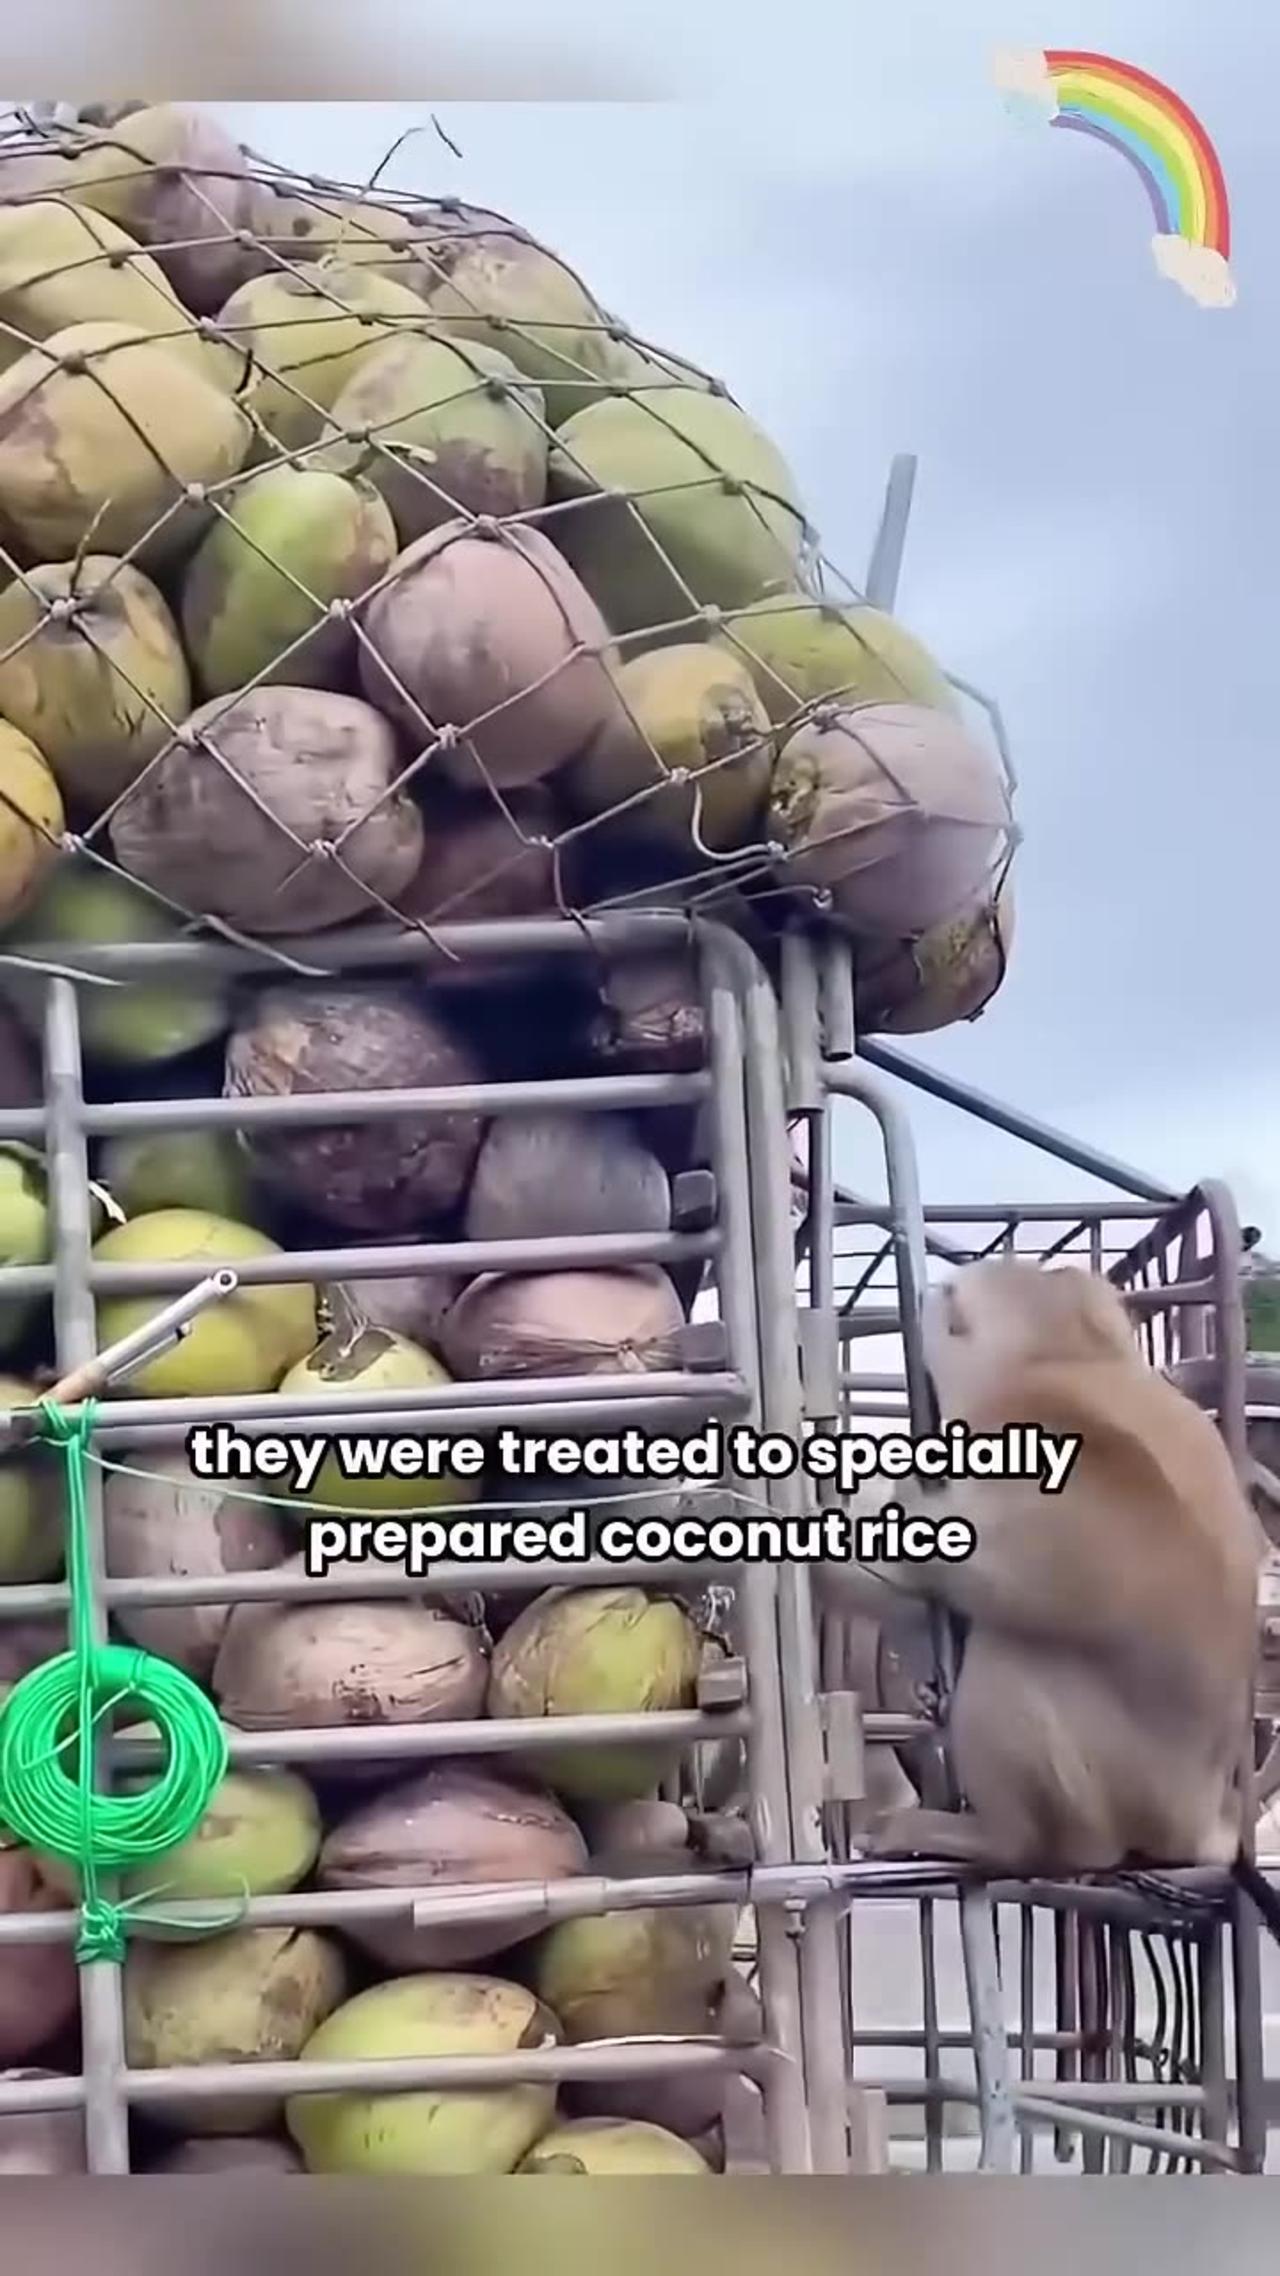 Thai Coconut Plantation Employs Monkeys, Ensures Sustenance